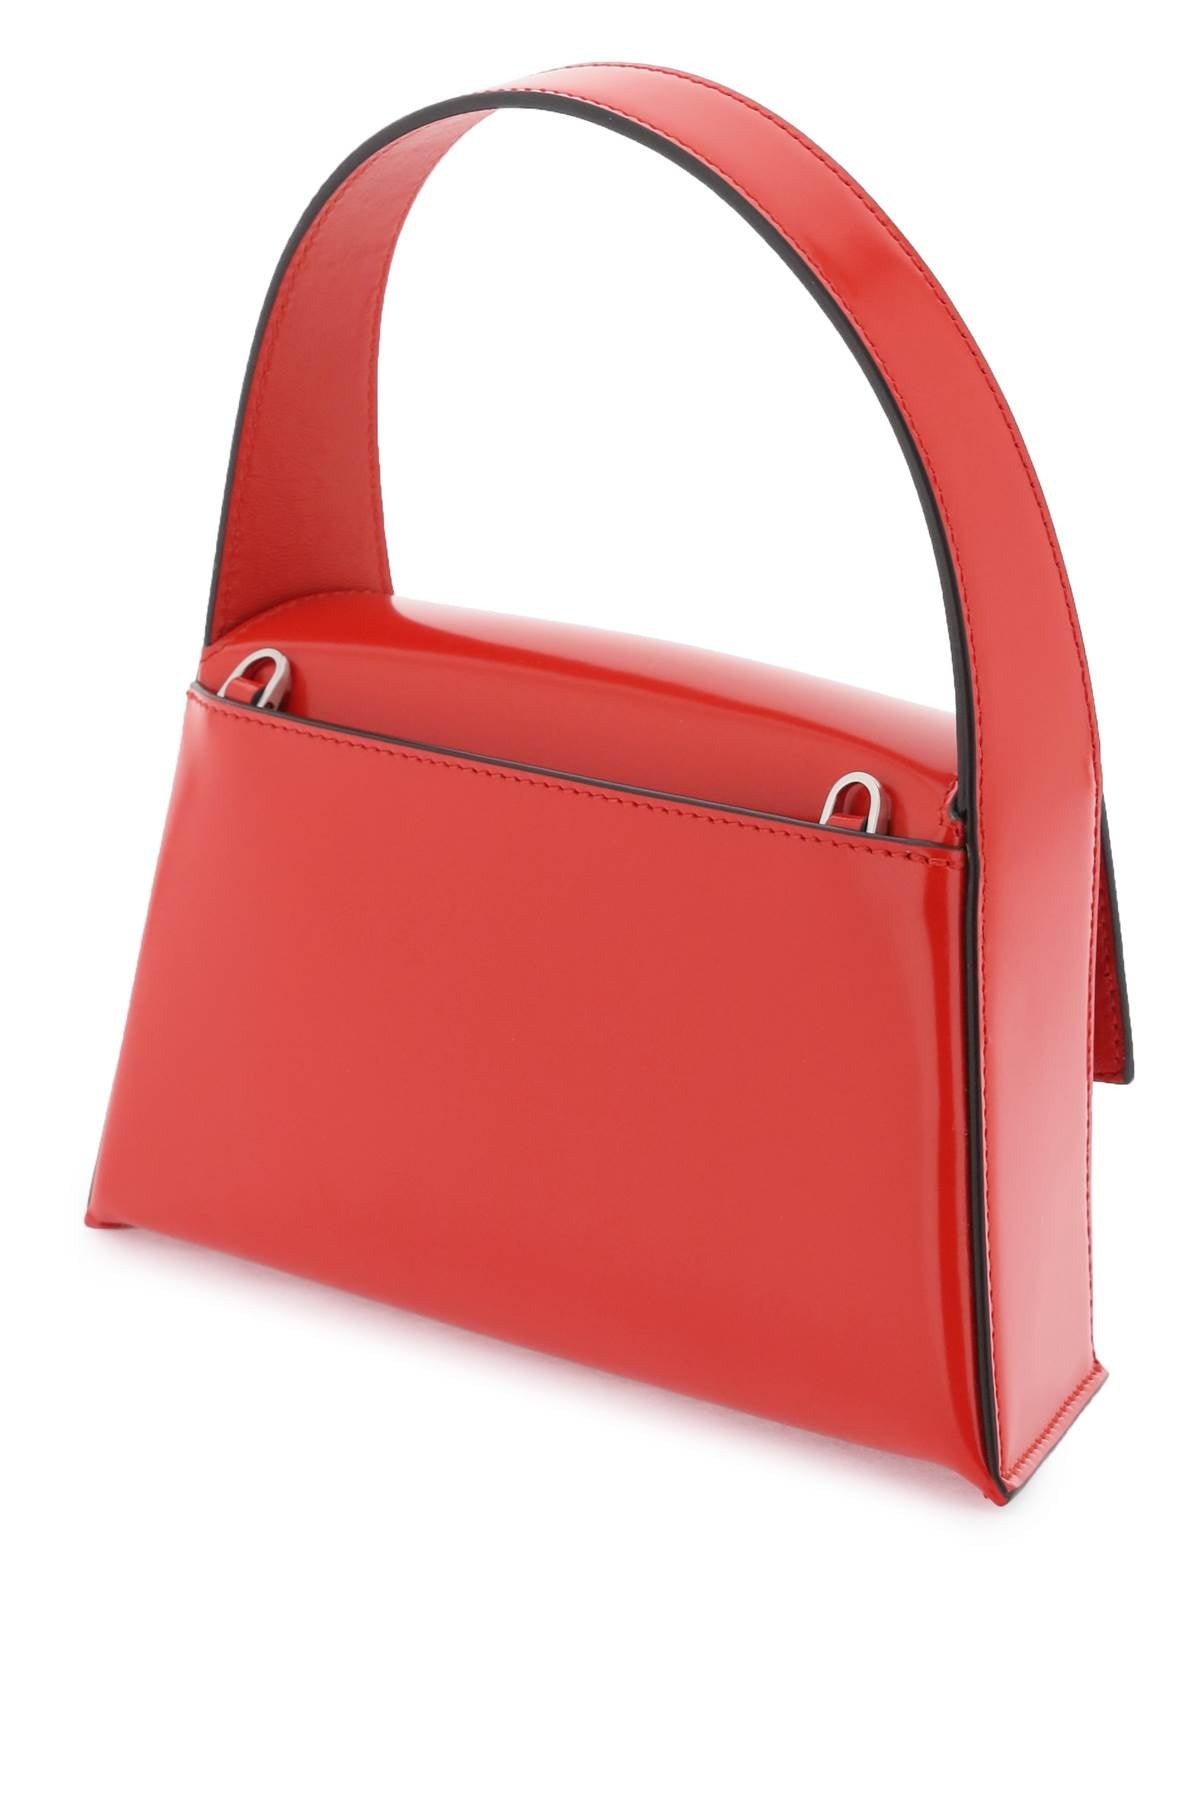 FERRAGAMO Geometric Red Leather Handbag for Women